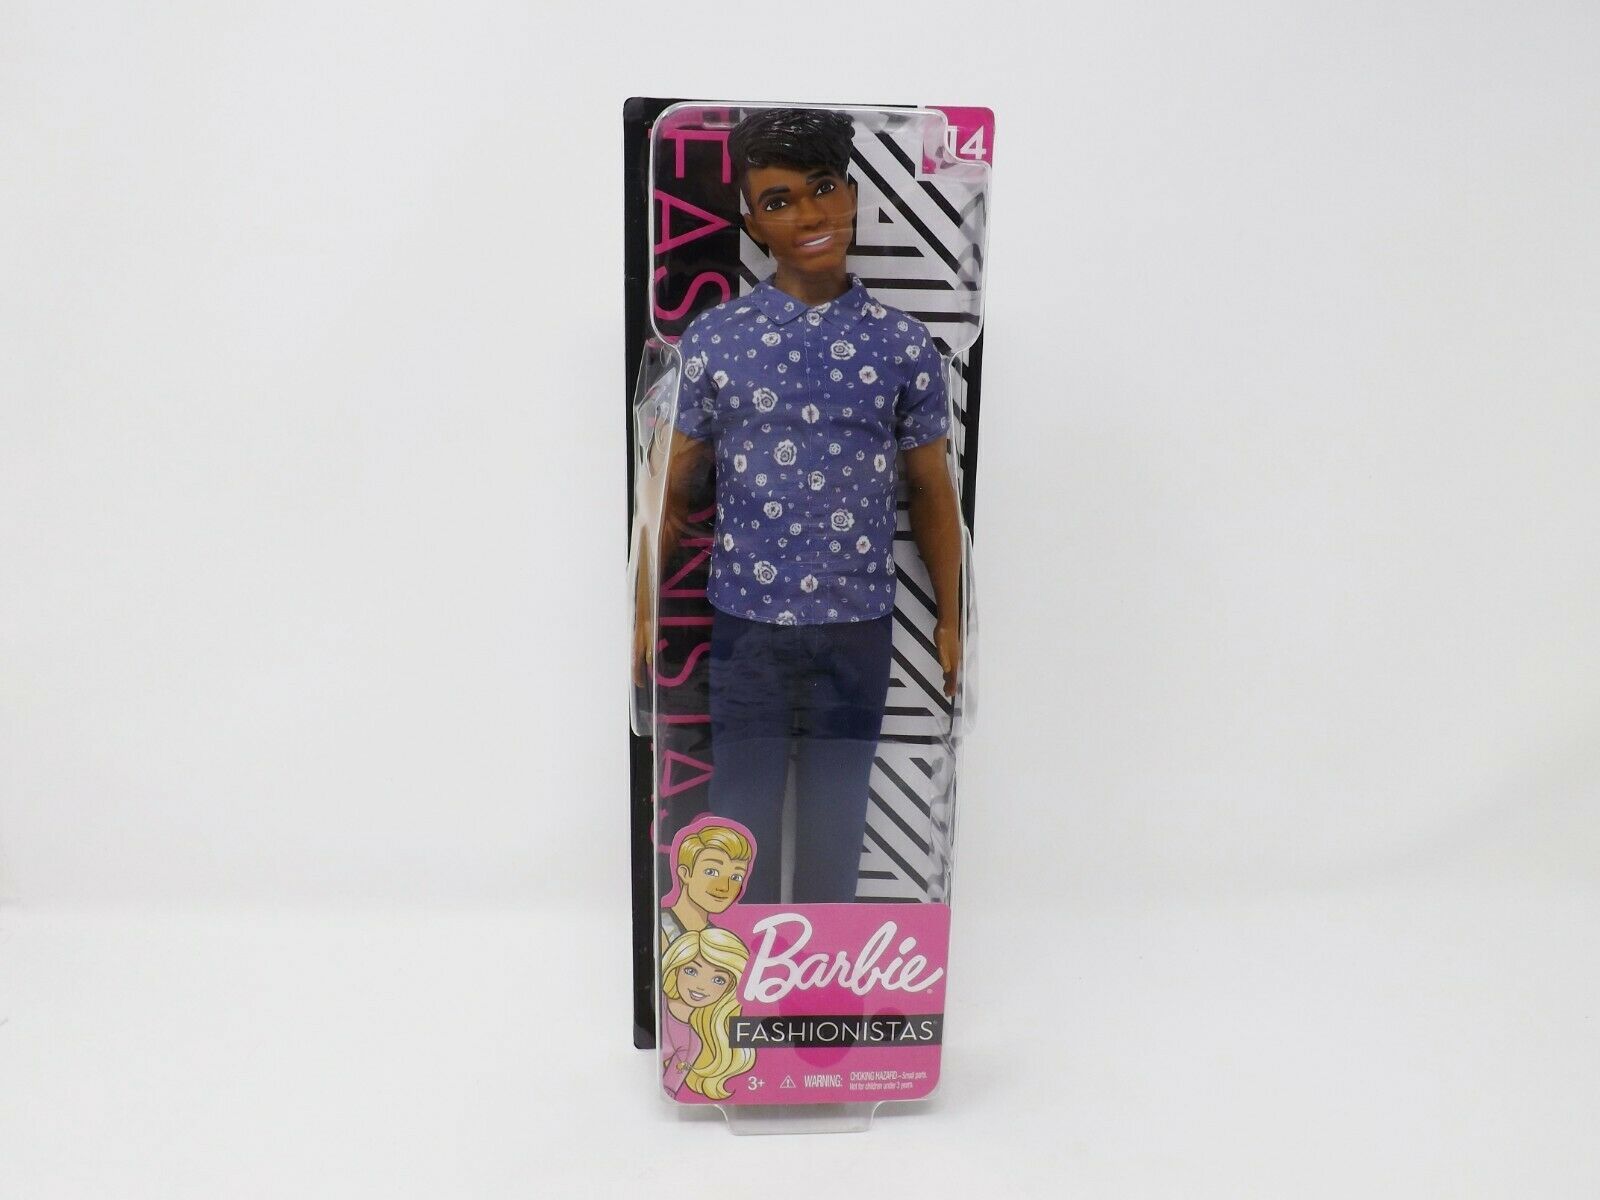 barbie fashionista 114